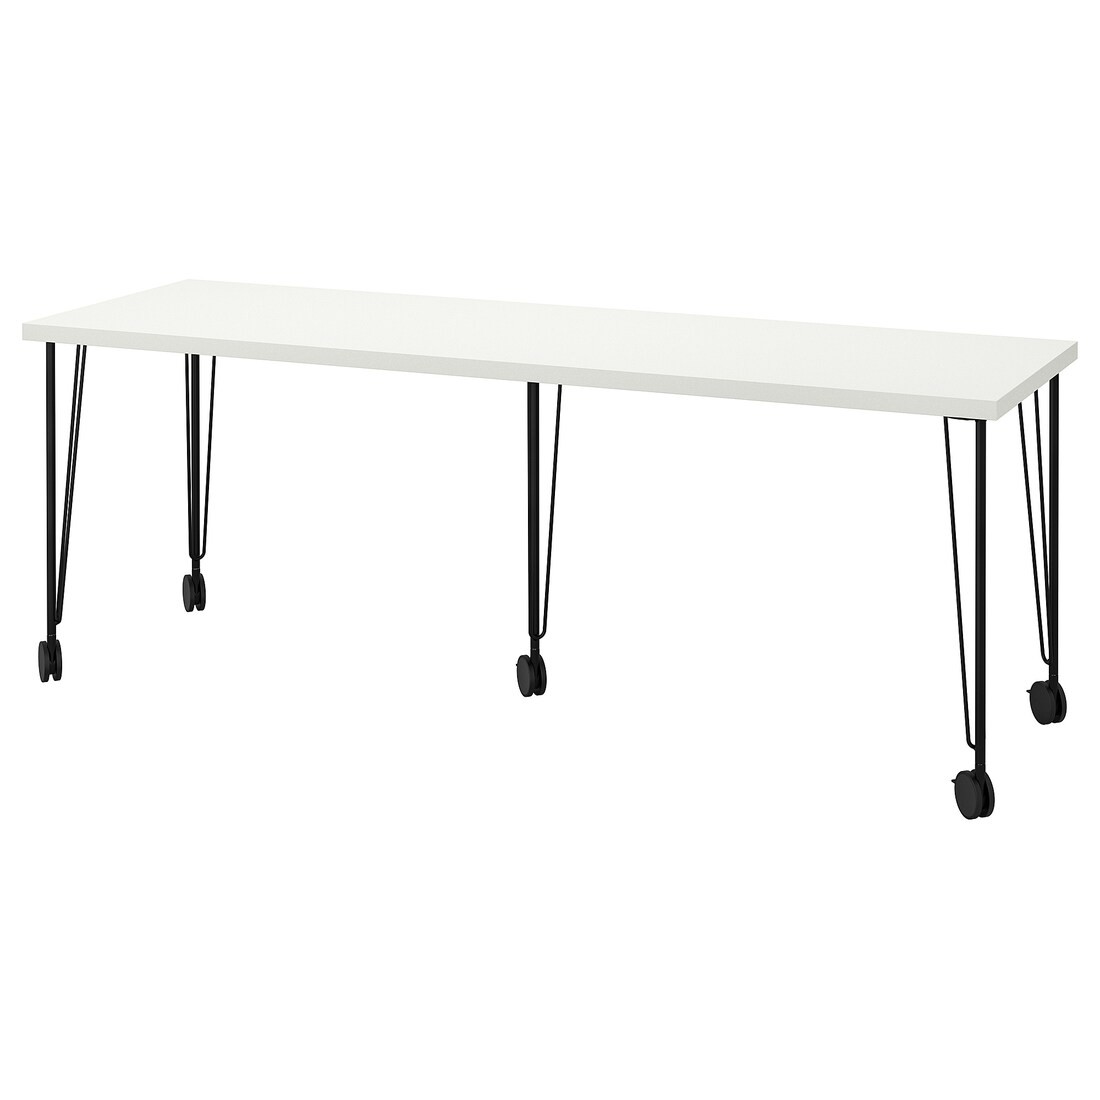 LAGKAPTEN / KRILLE Письменный стол, белый / черный, 200x60 см